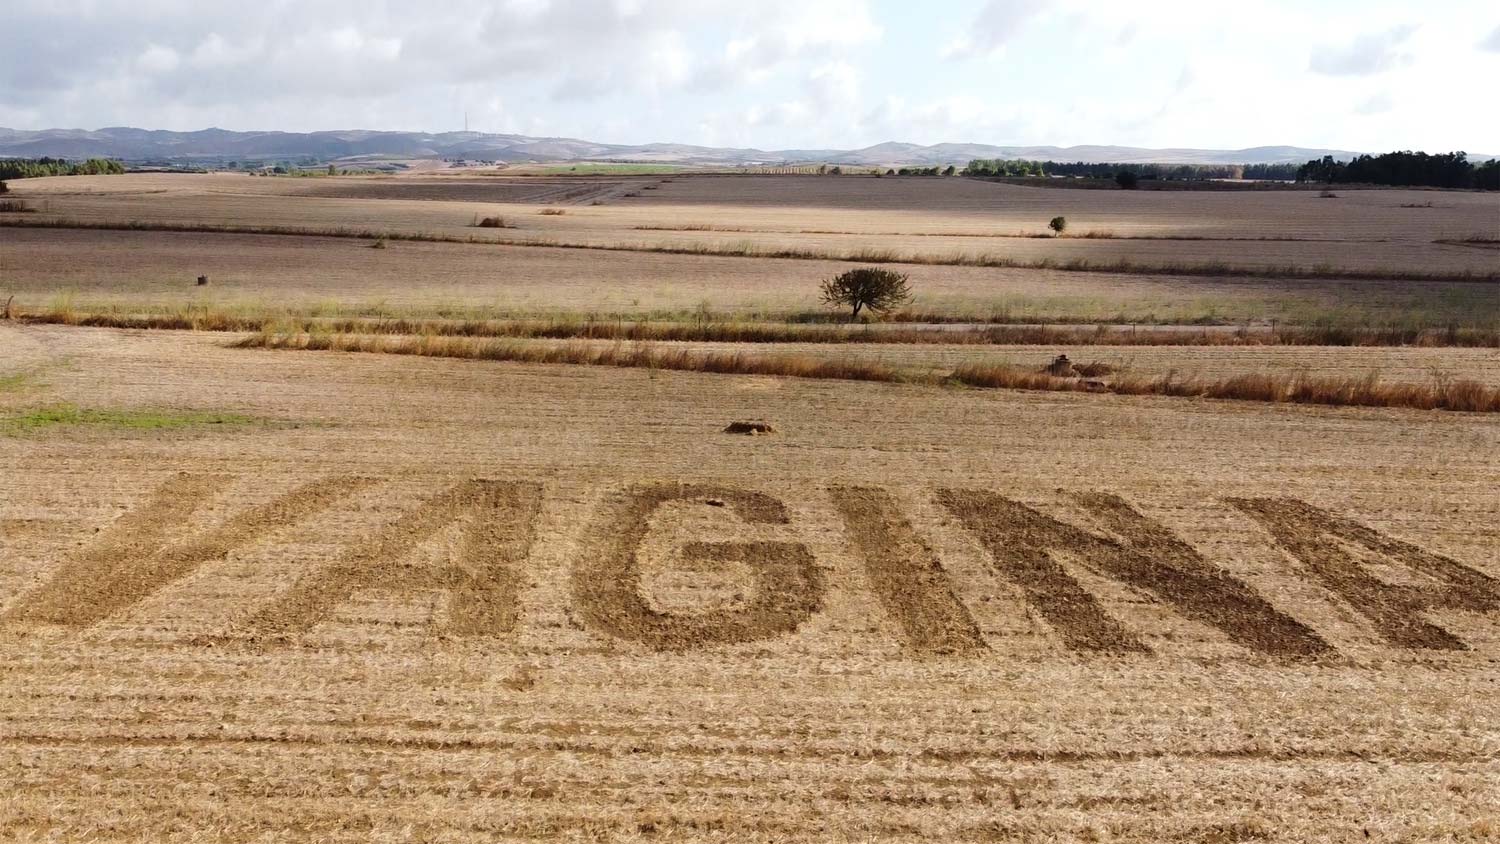 Sardegna, artista crea enorme scritta VAGINA in un campo